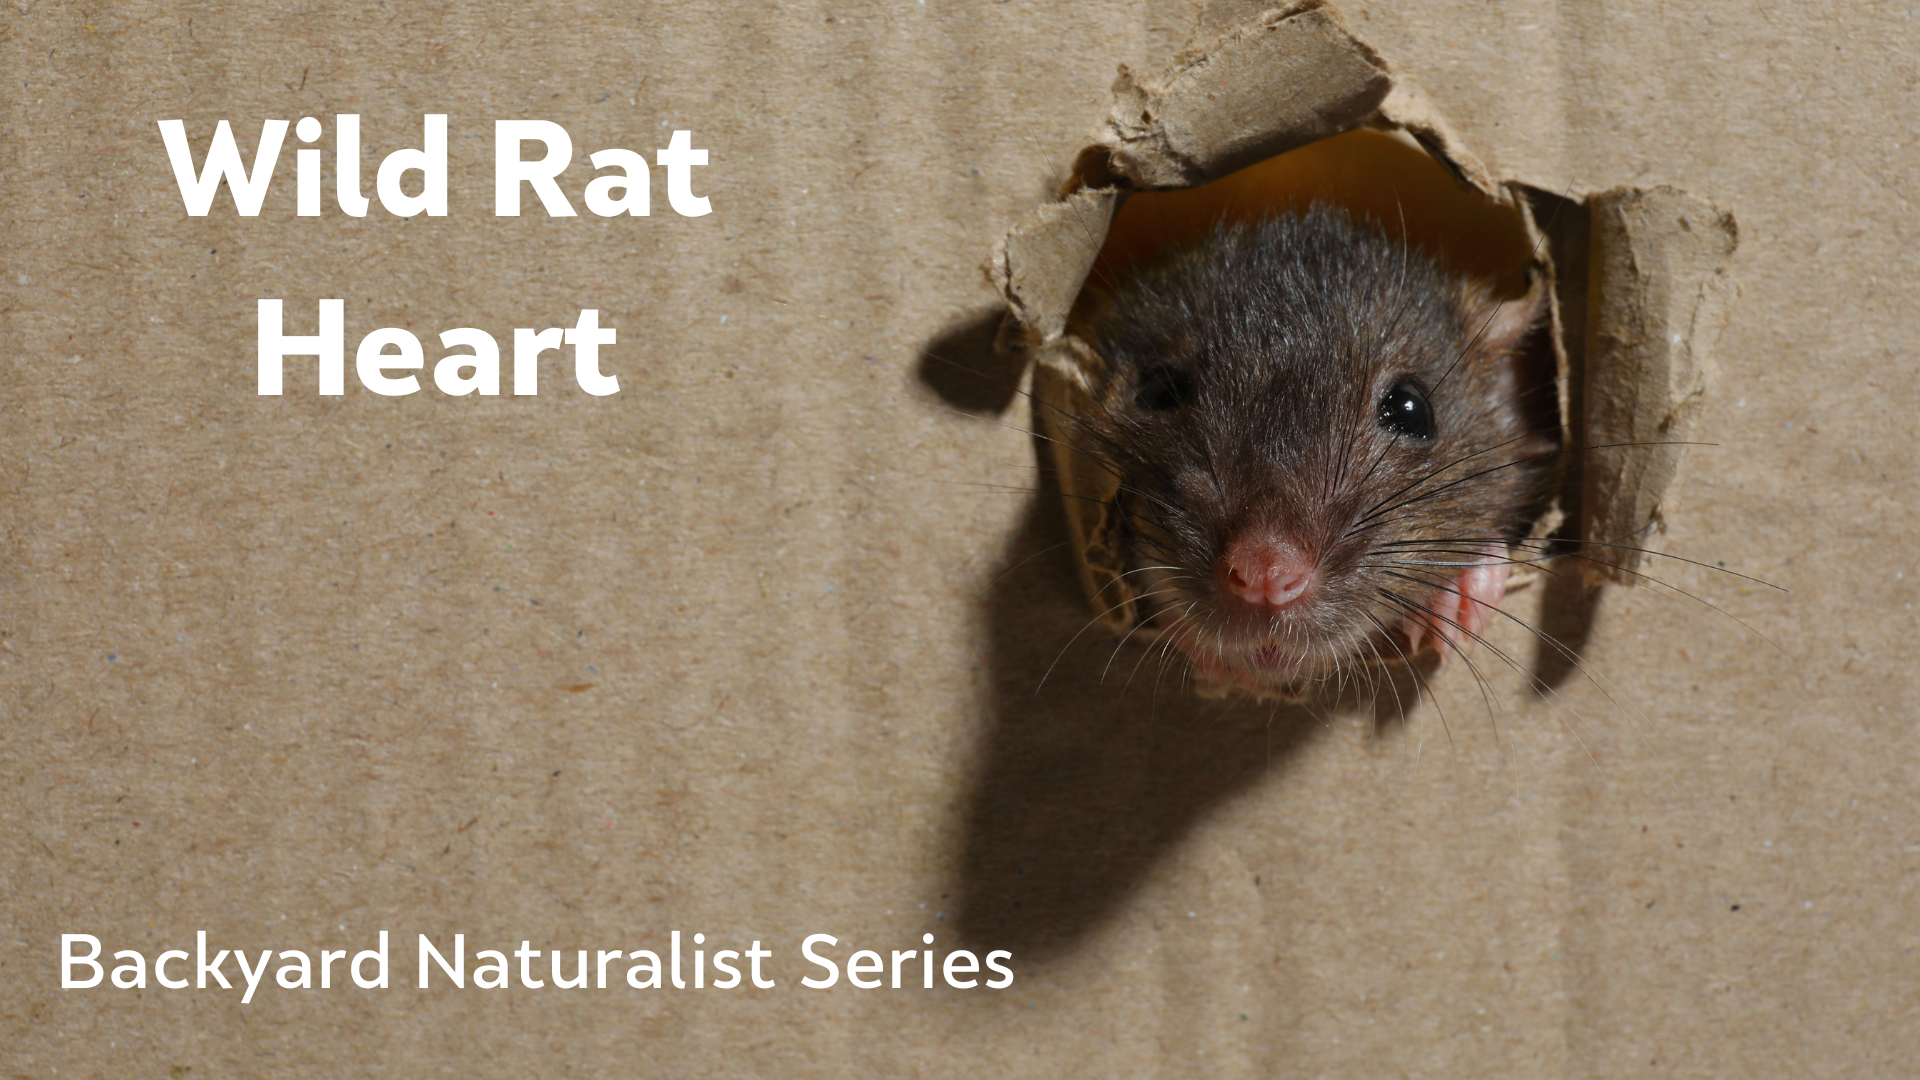 Wild Rat Heart - Backyard Naturalist Series